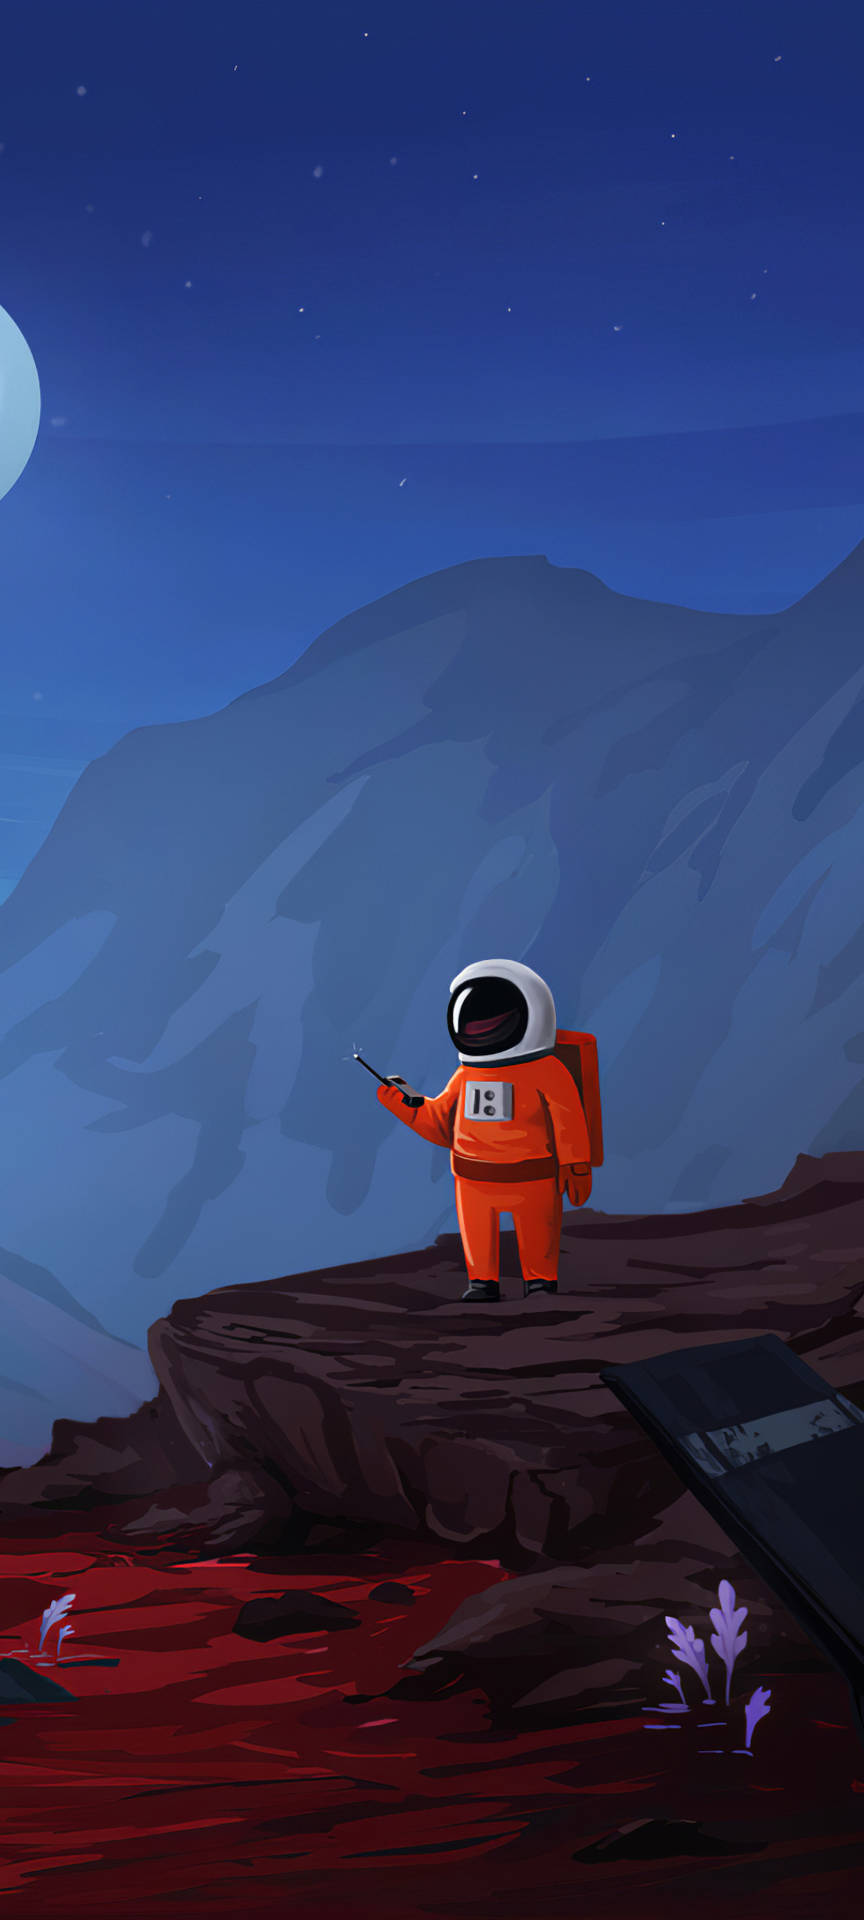 Download Cartoon Astronaut With Walkie-talkie Wallpaper 